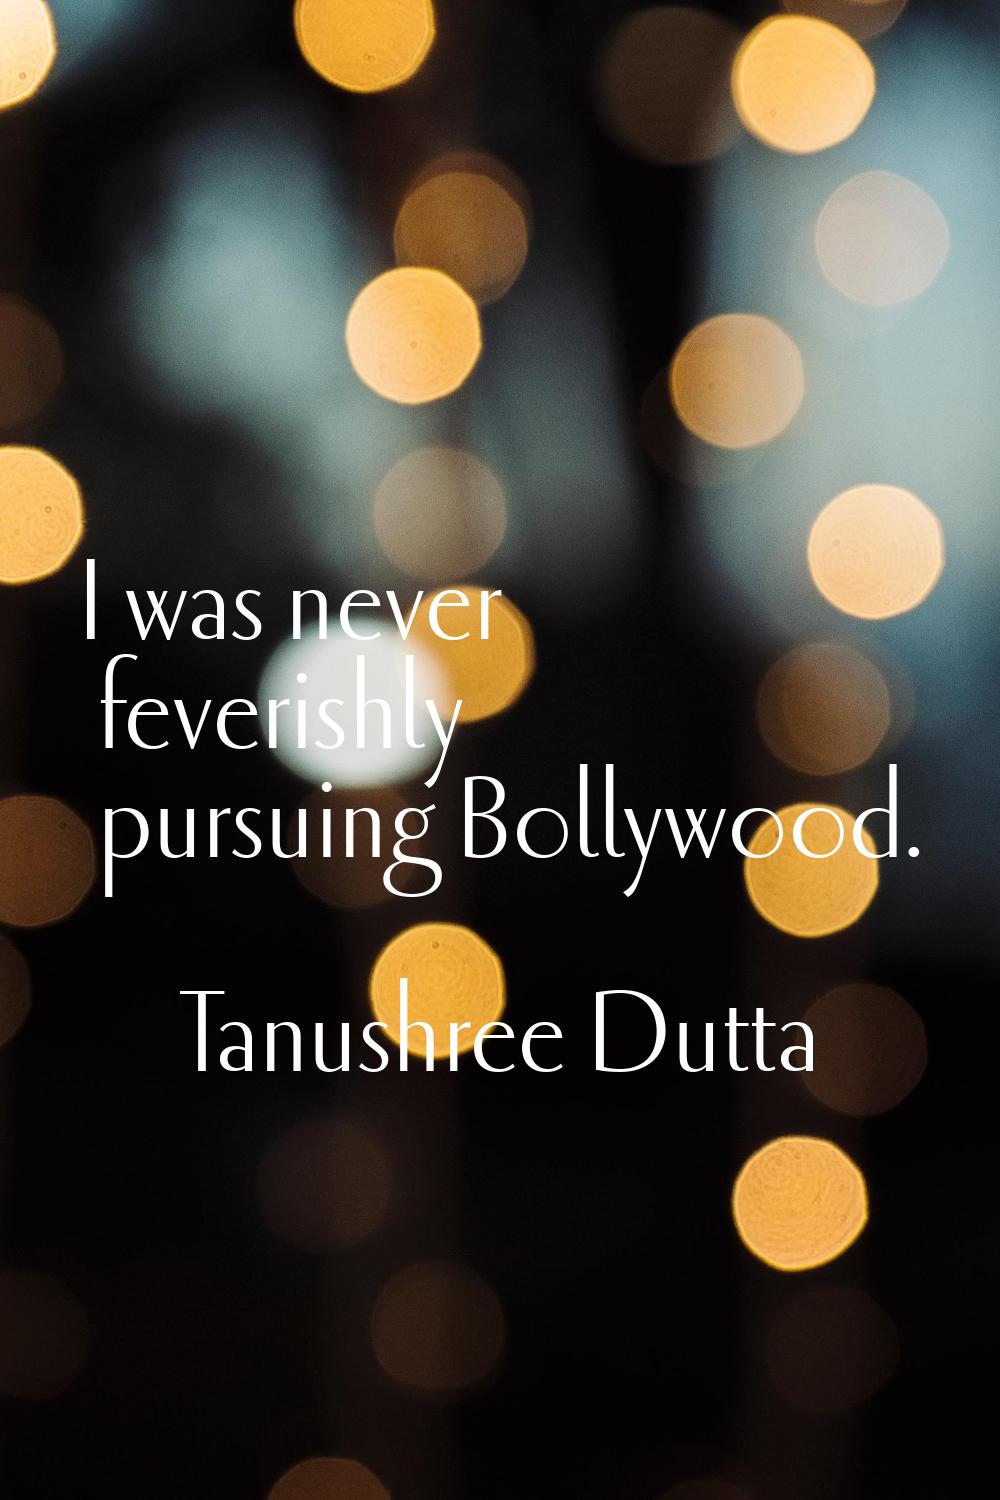 I was never feverishly pursuing Bollywood.